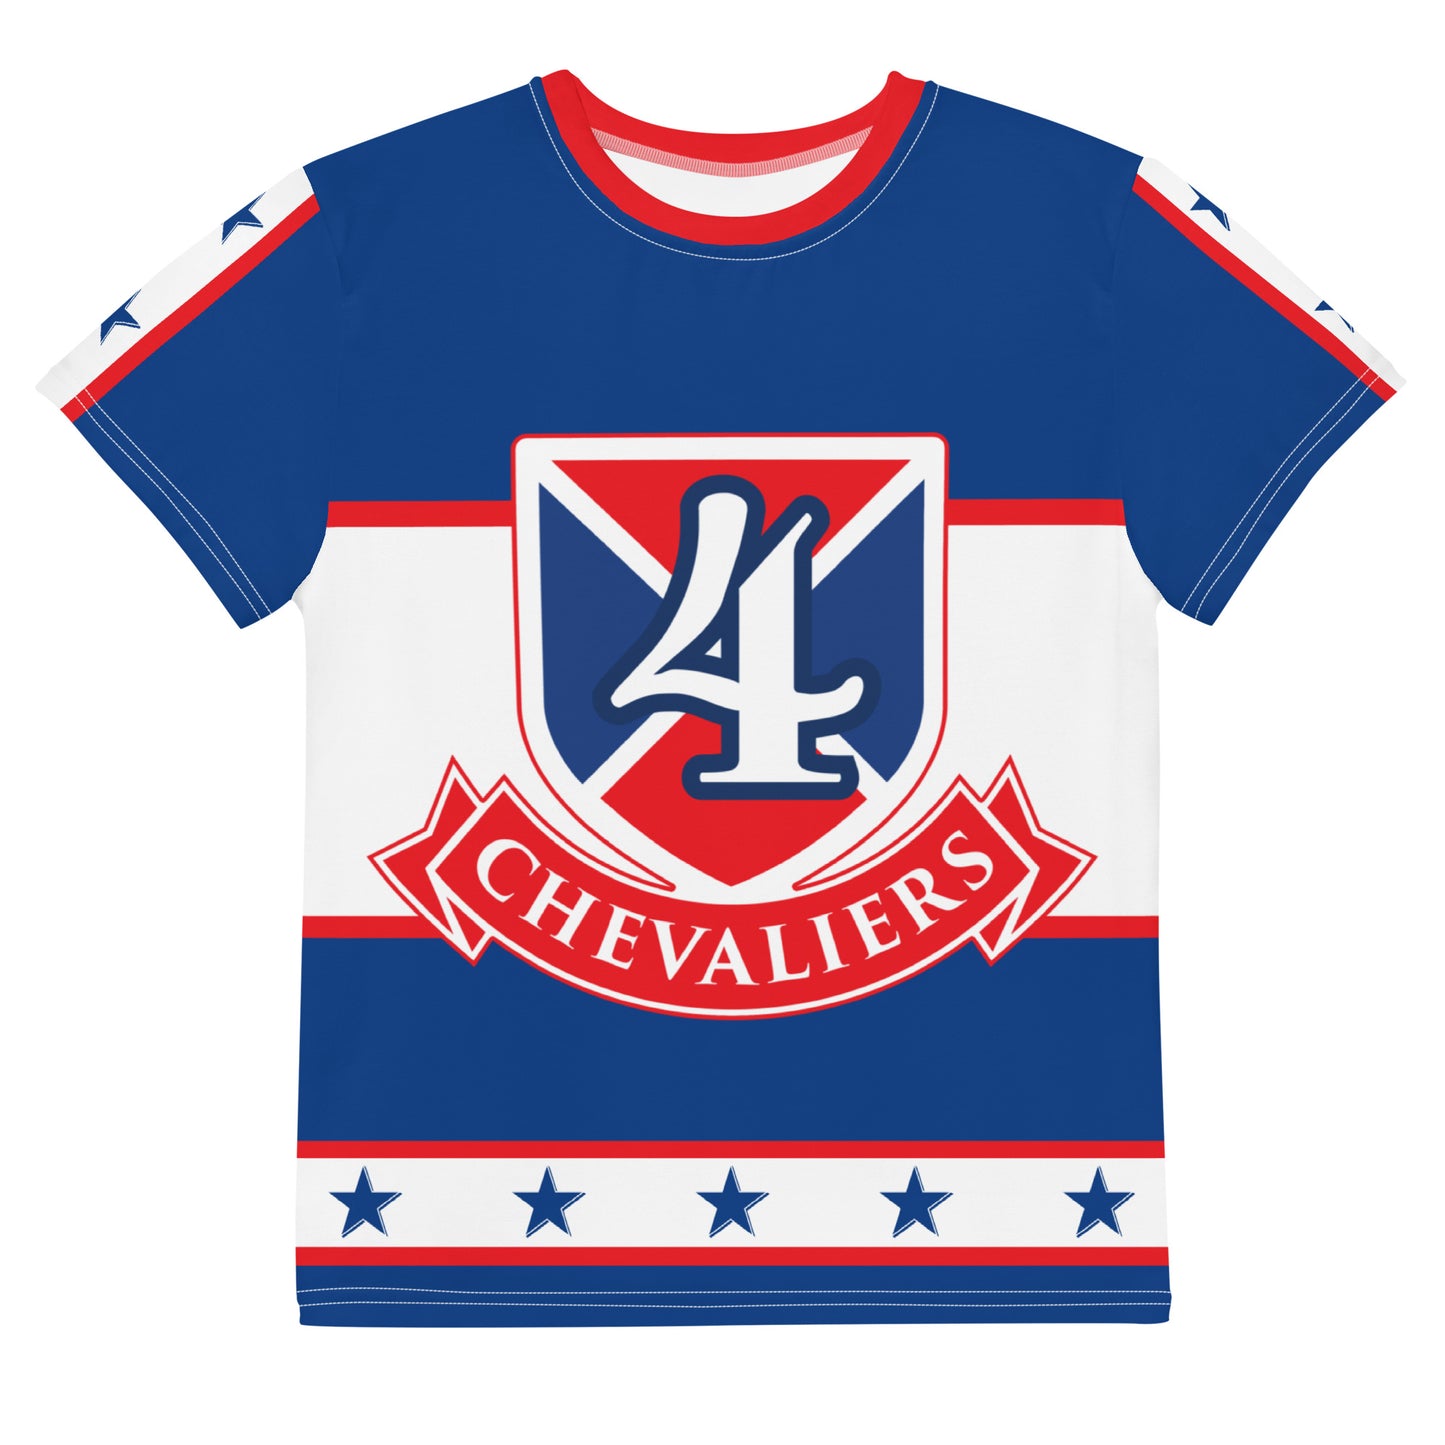 T-Shirt jersey style Teenage - 7. Vallée